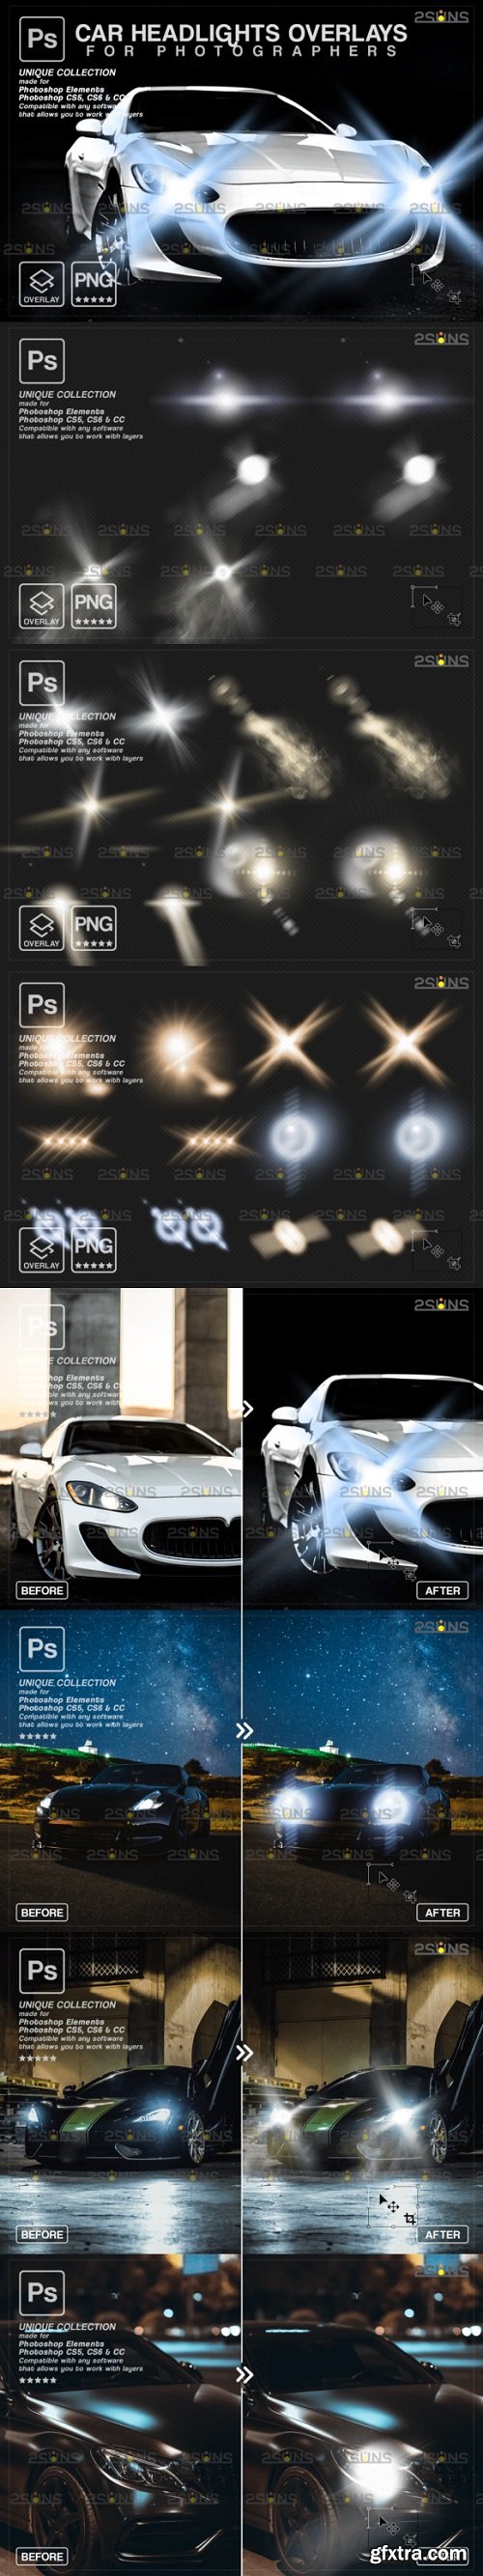 Car Headlights Photo Overlays